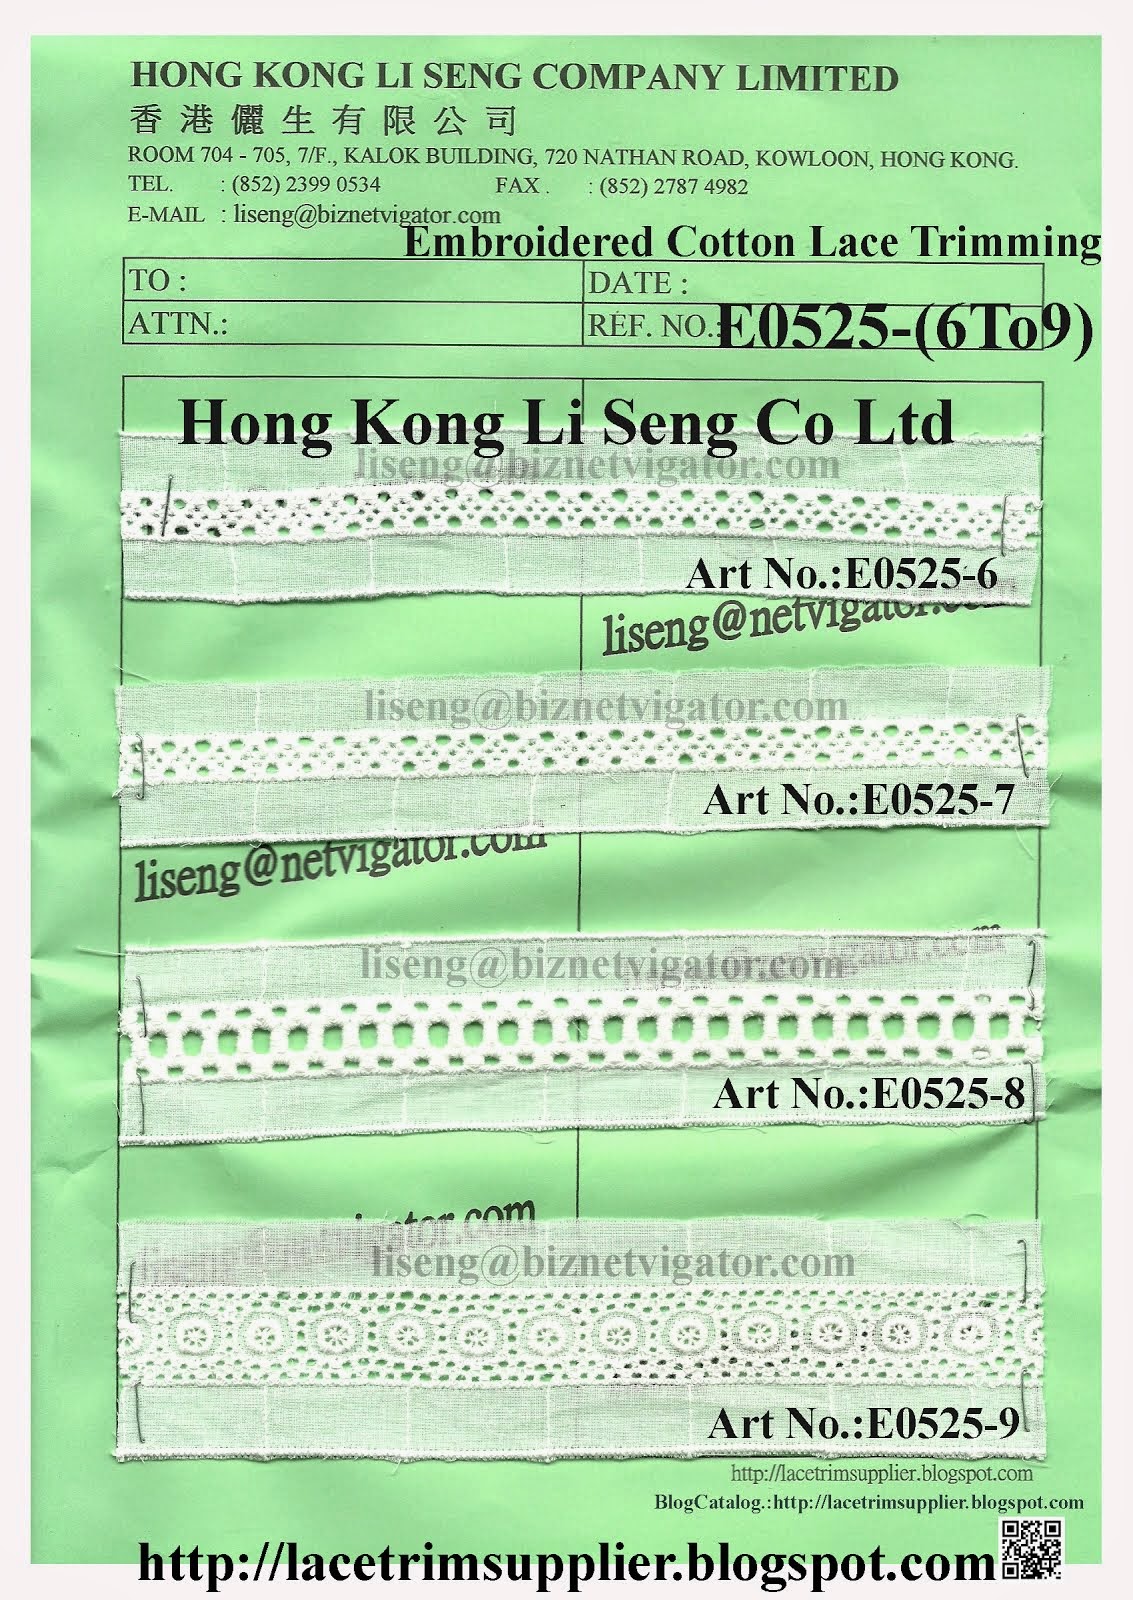 Embroidered Cotton Lace Trimming Factory - Hong Kong Li Seng Co Ltd